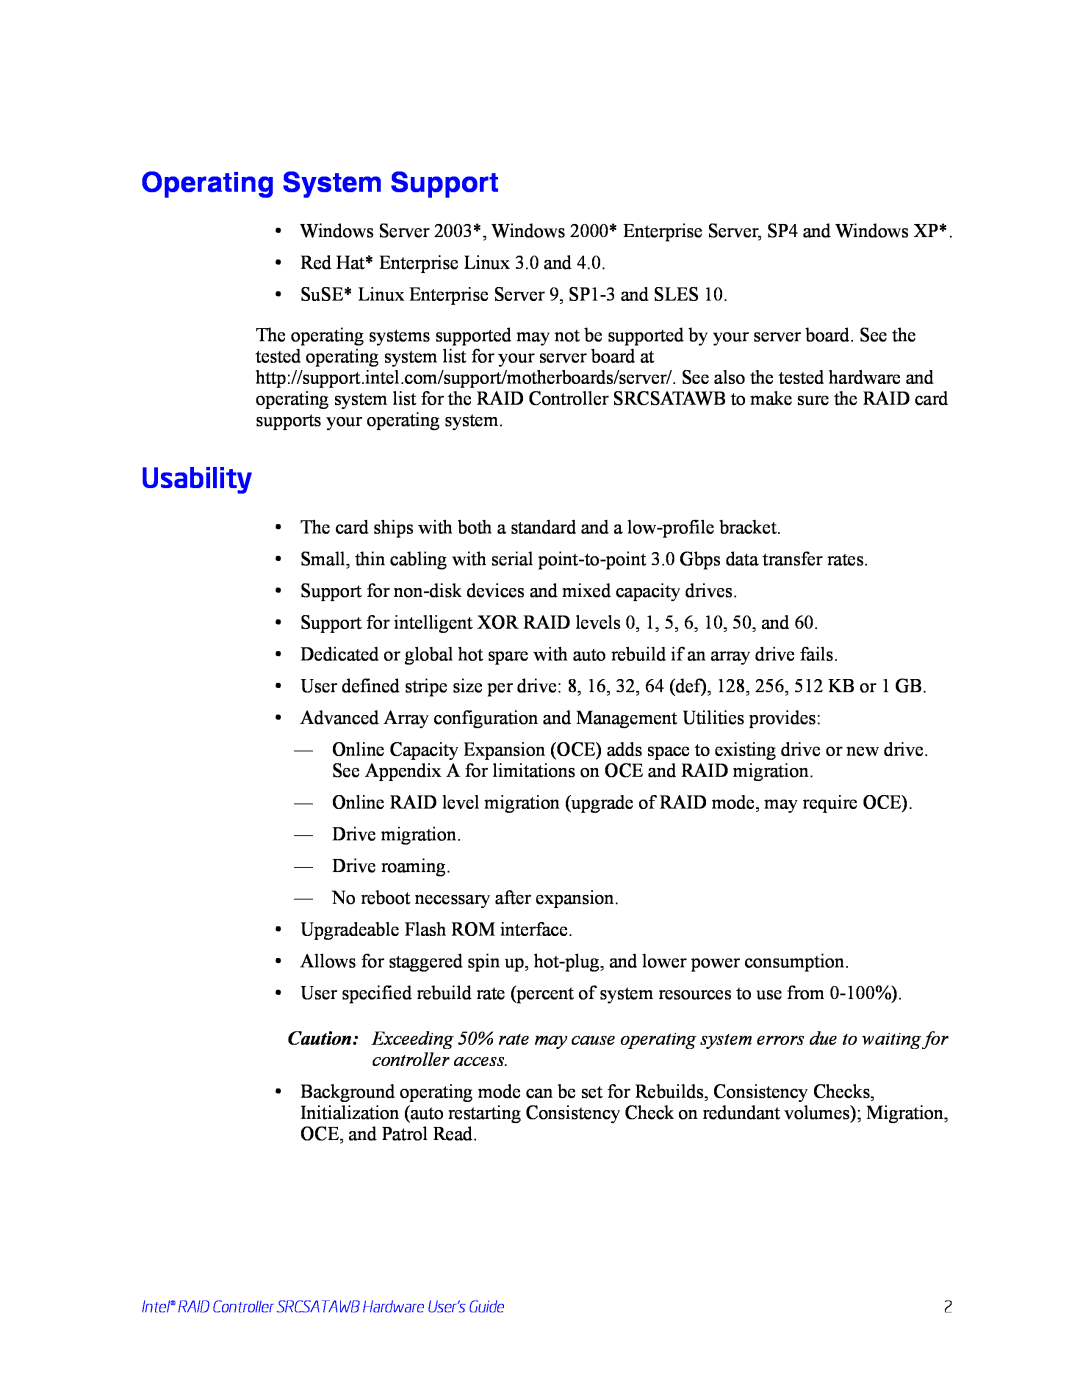 Intel SRCSATAWB manual Operating System Support, Usability 